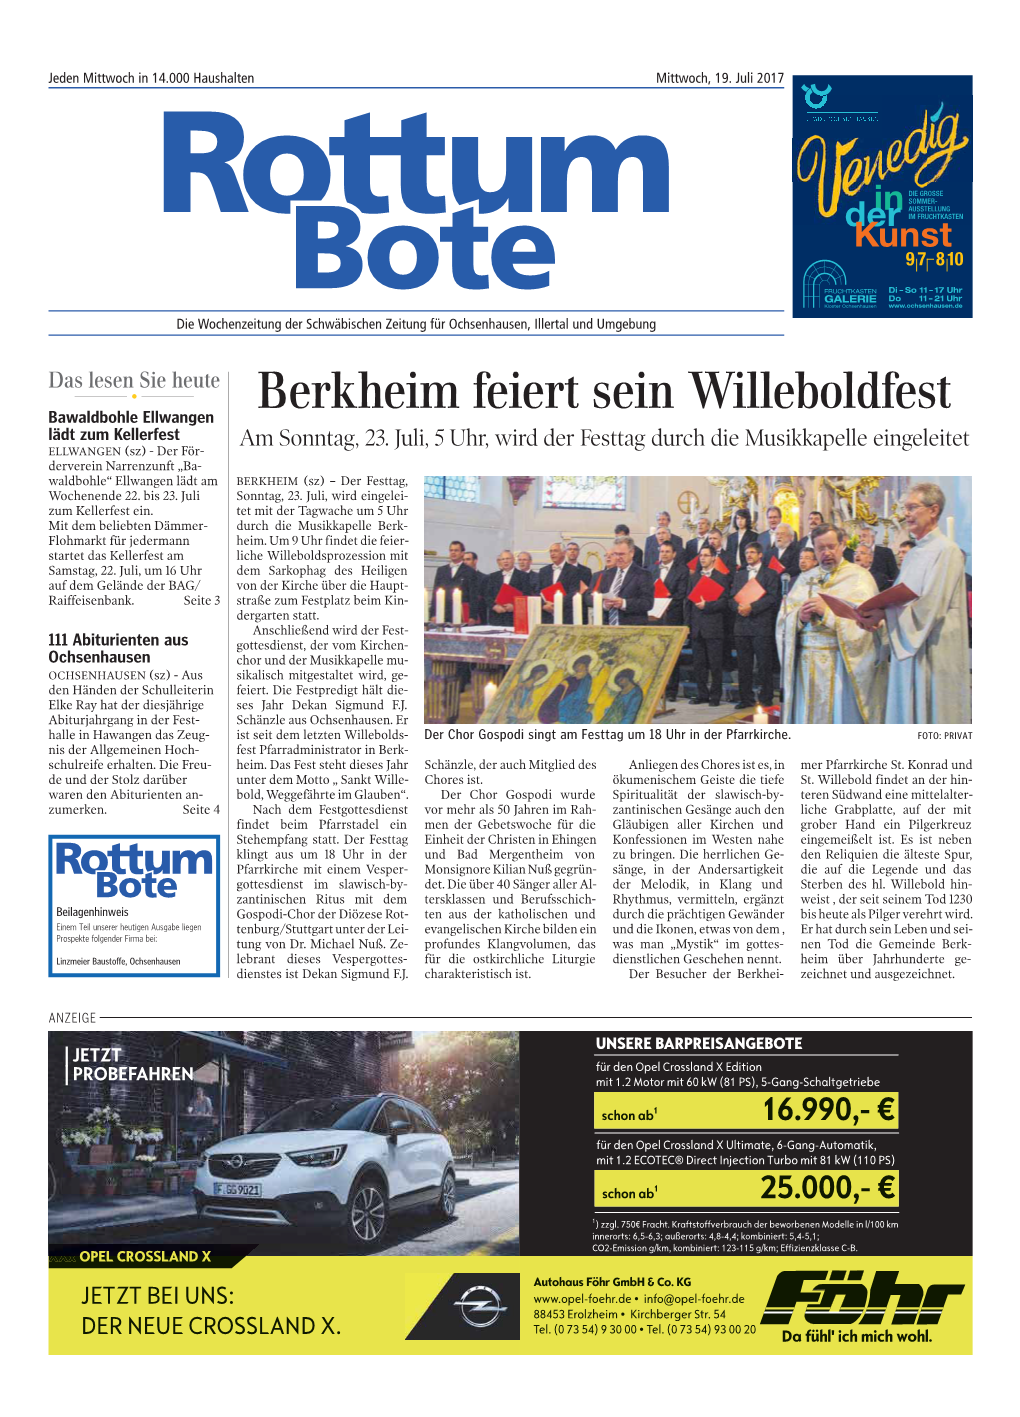 Berkheim Feiert Sein Willeboldfest Bawaldbohle Ellwangen Lädt Zum Kellerfest Am Sonntag, 23